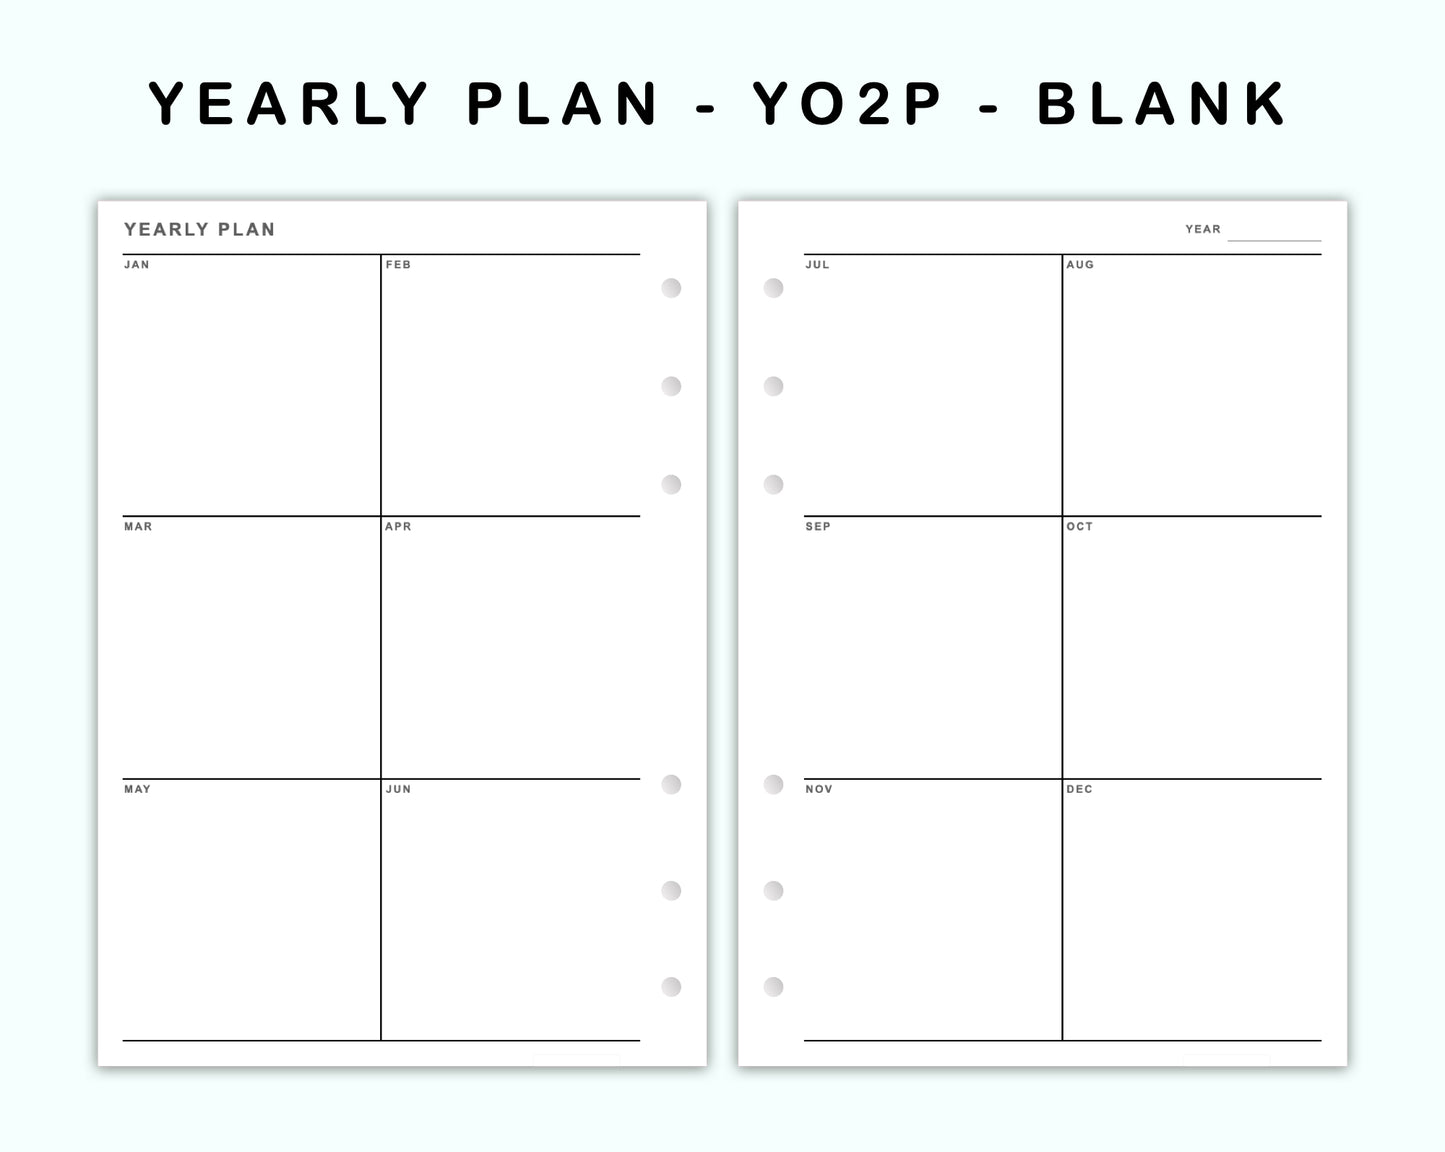 Personal Wide Inserts - Yearly Plan - YO2P - Blank